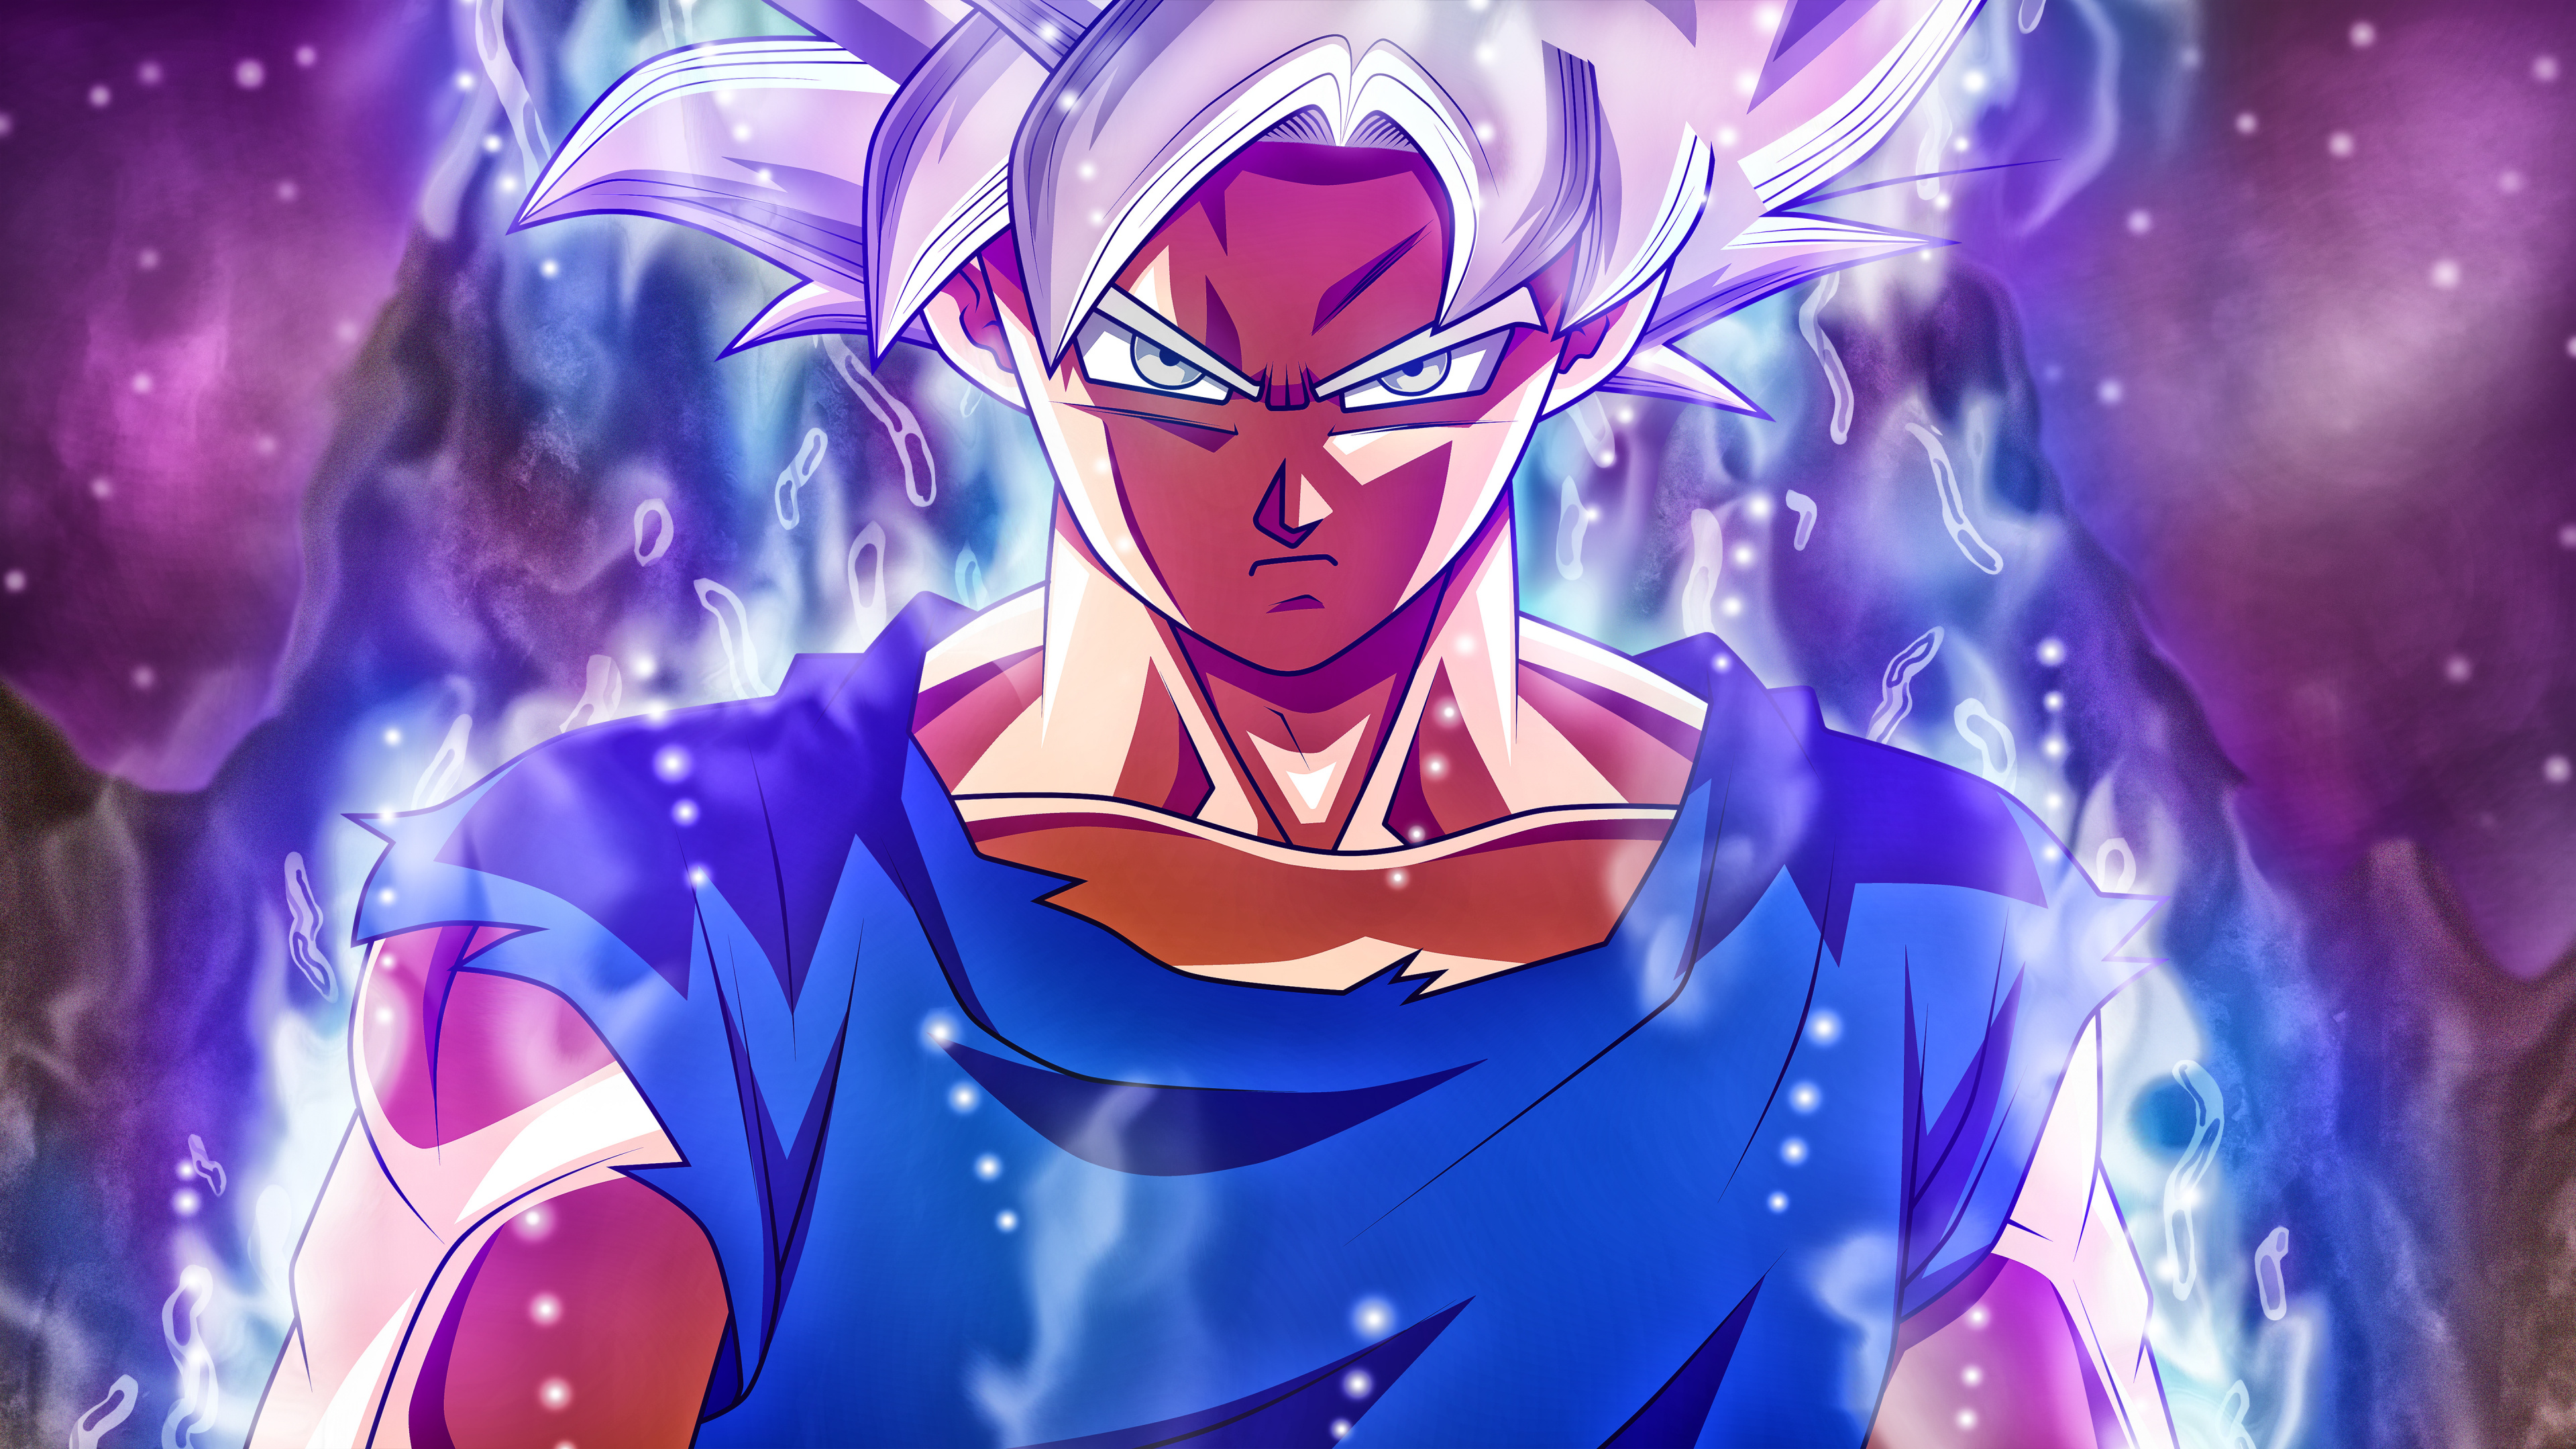 Personaje de Anime Masculino de Pelo Azul. Wallpaper in 3840x2160 Resolution